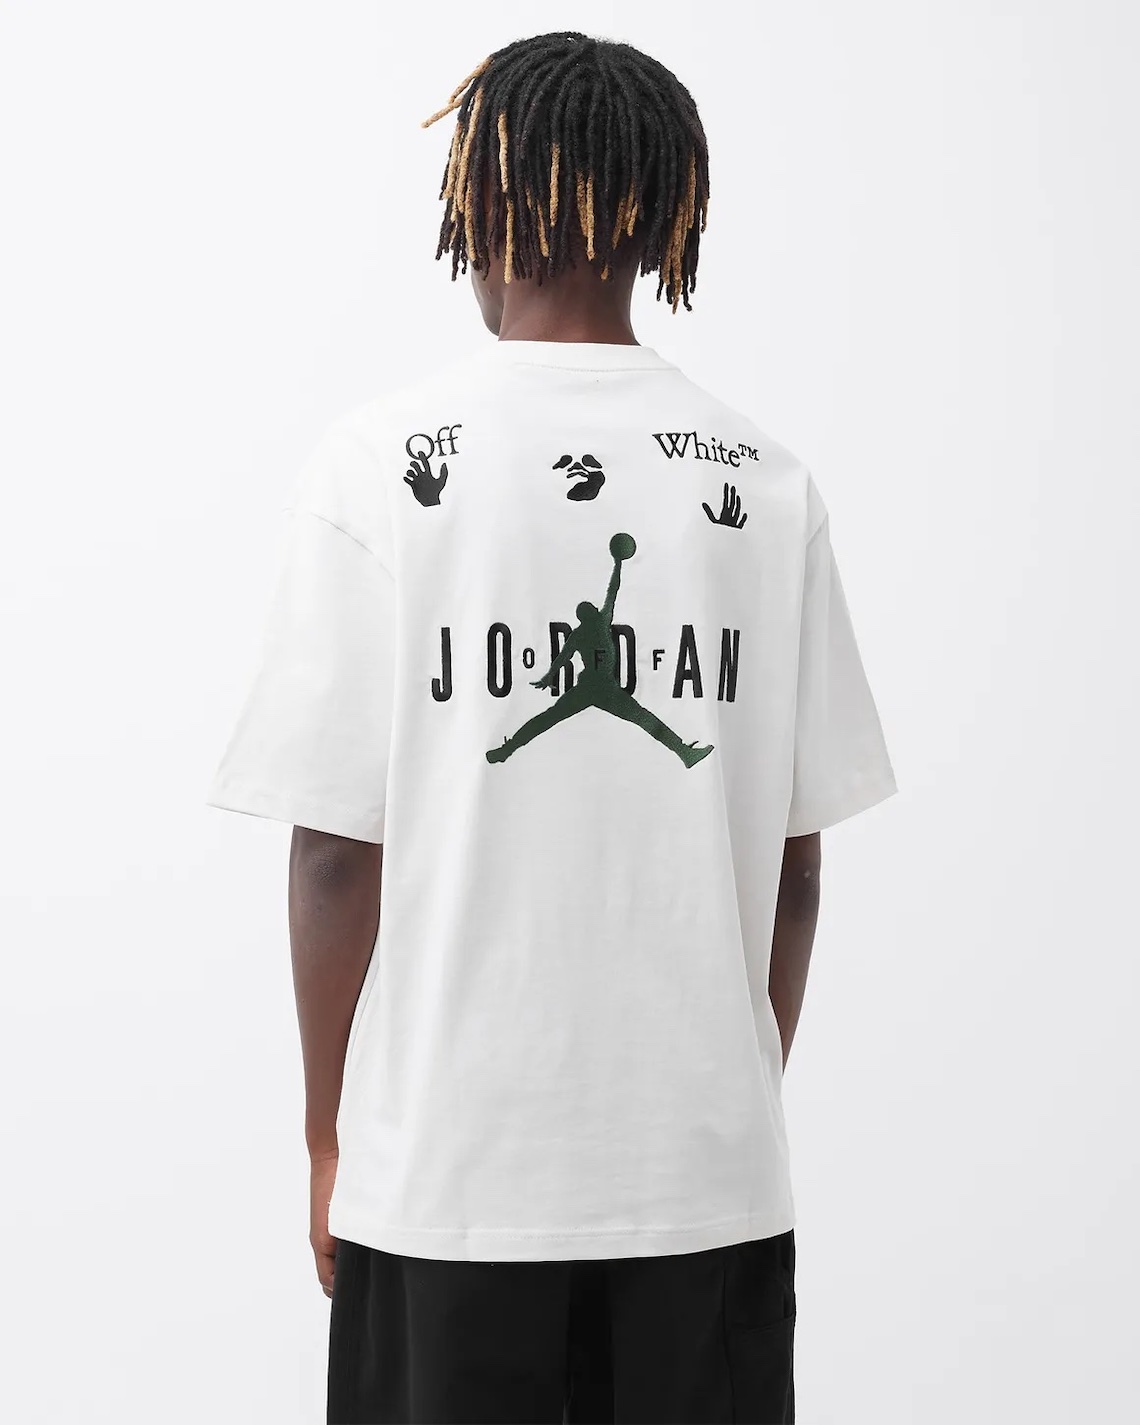 Jordan x Off-White Apparel Collection XL